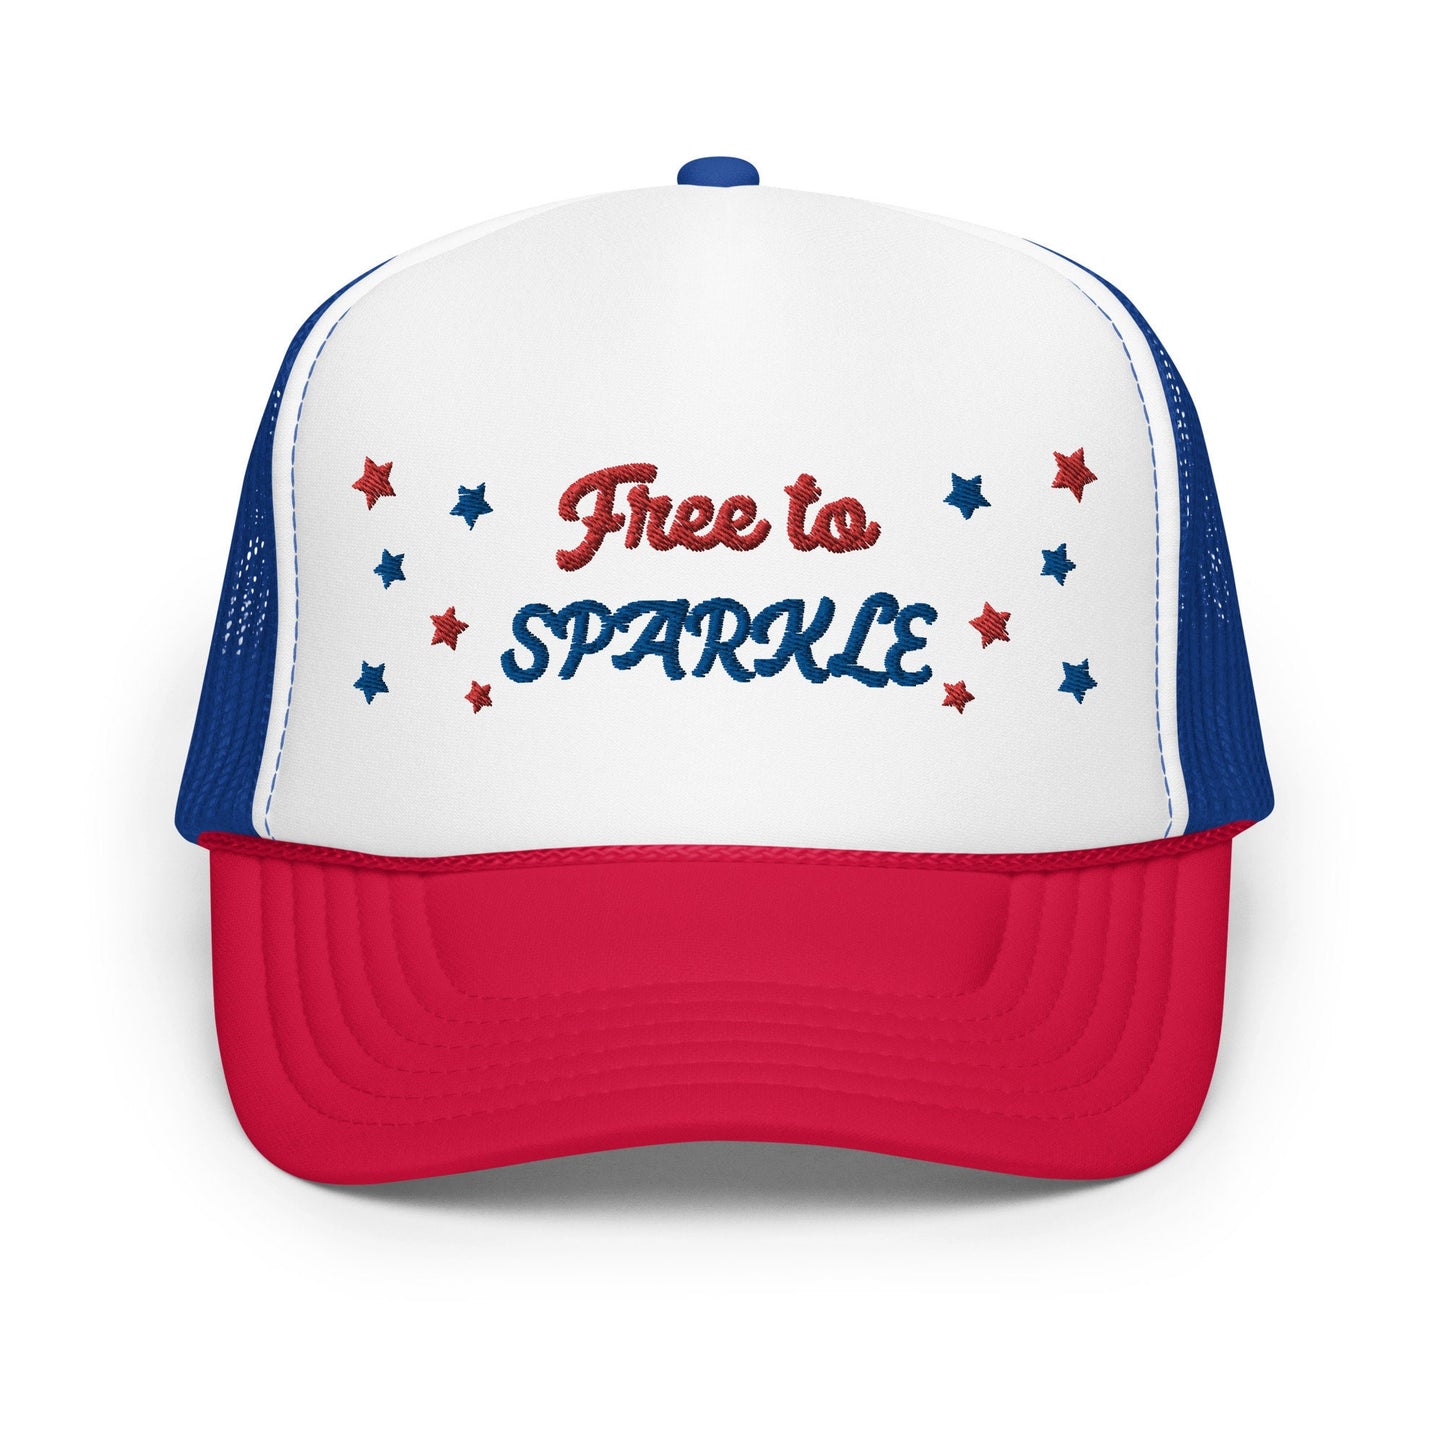 Free to Sparkle Truker Hat